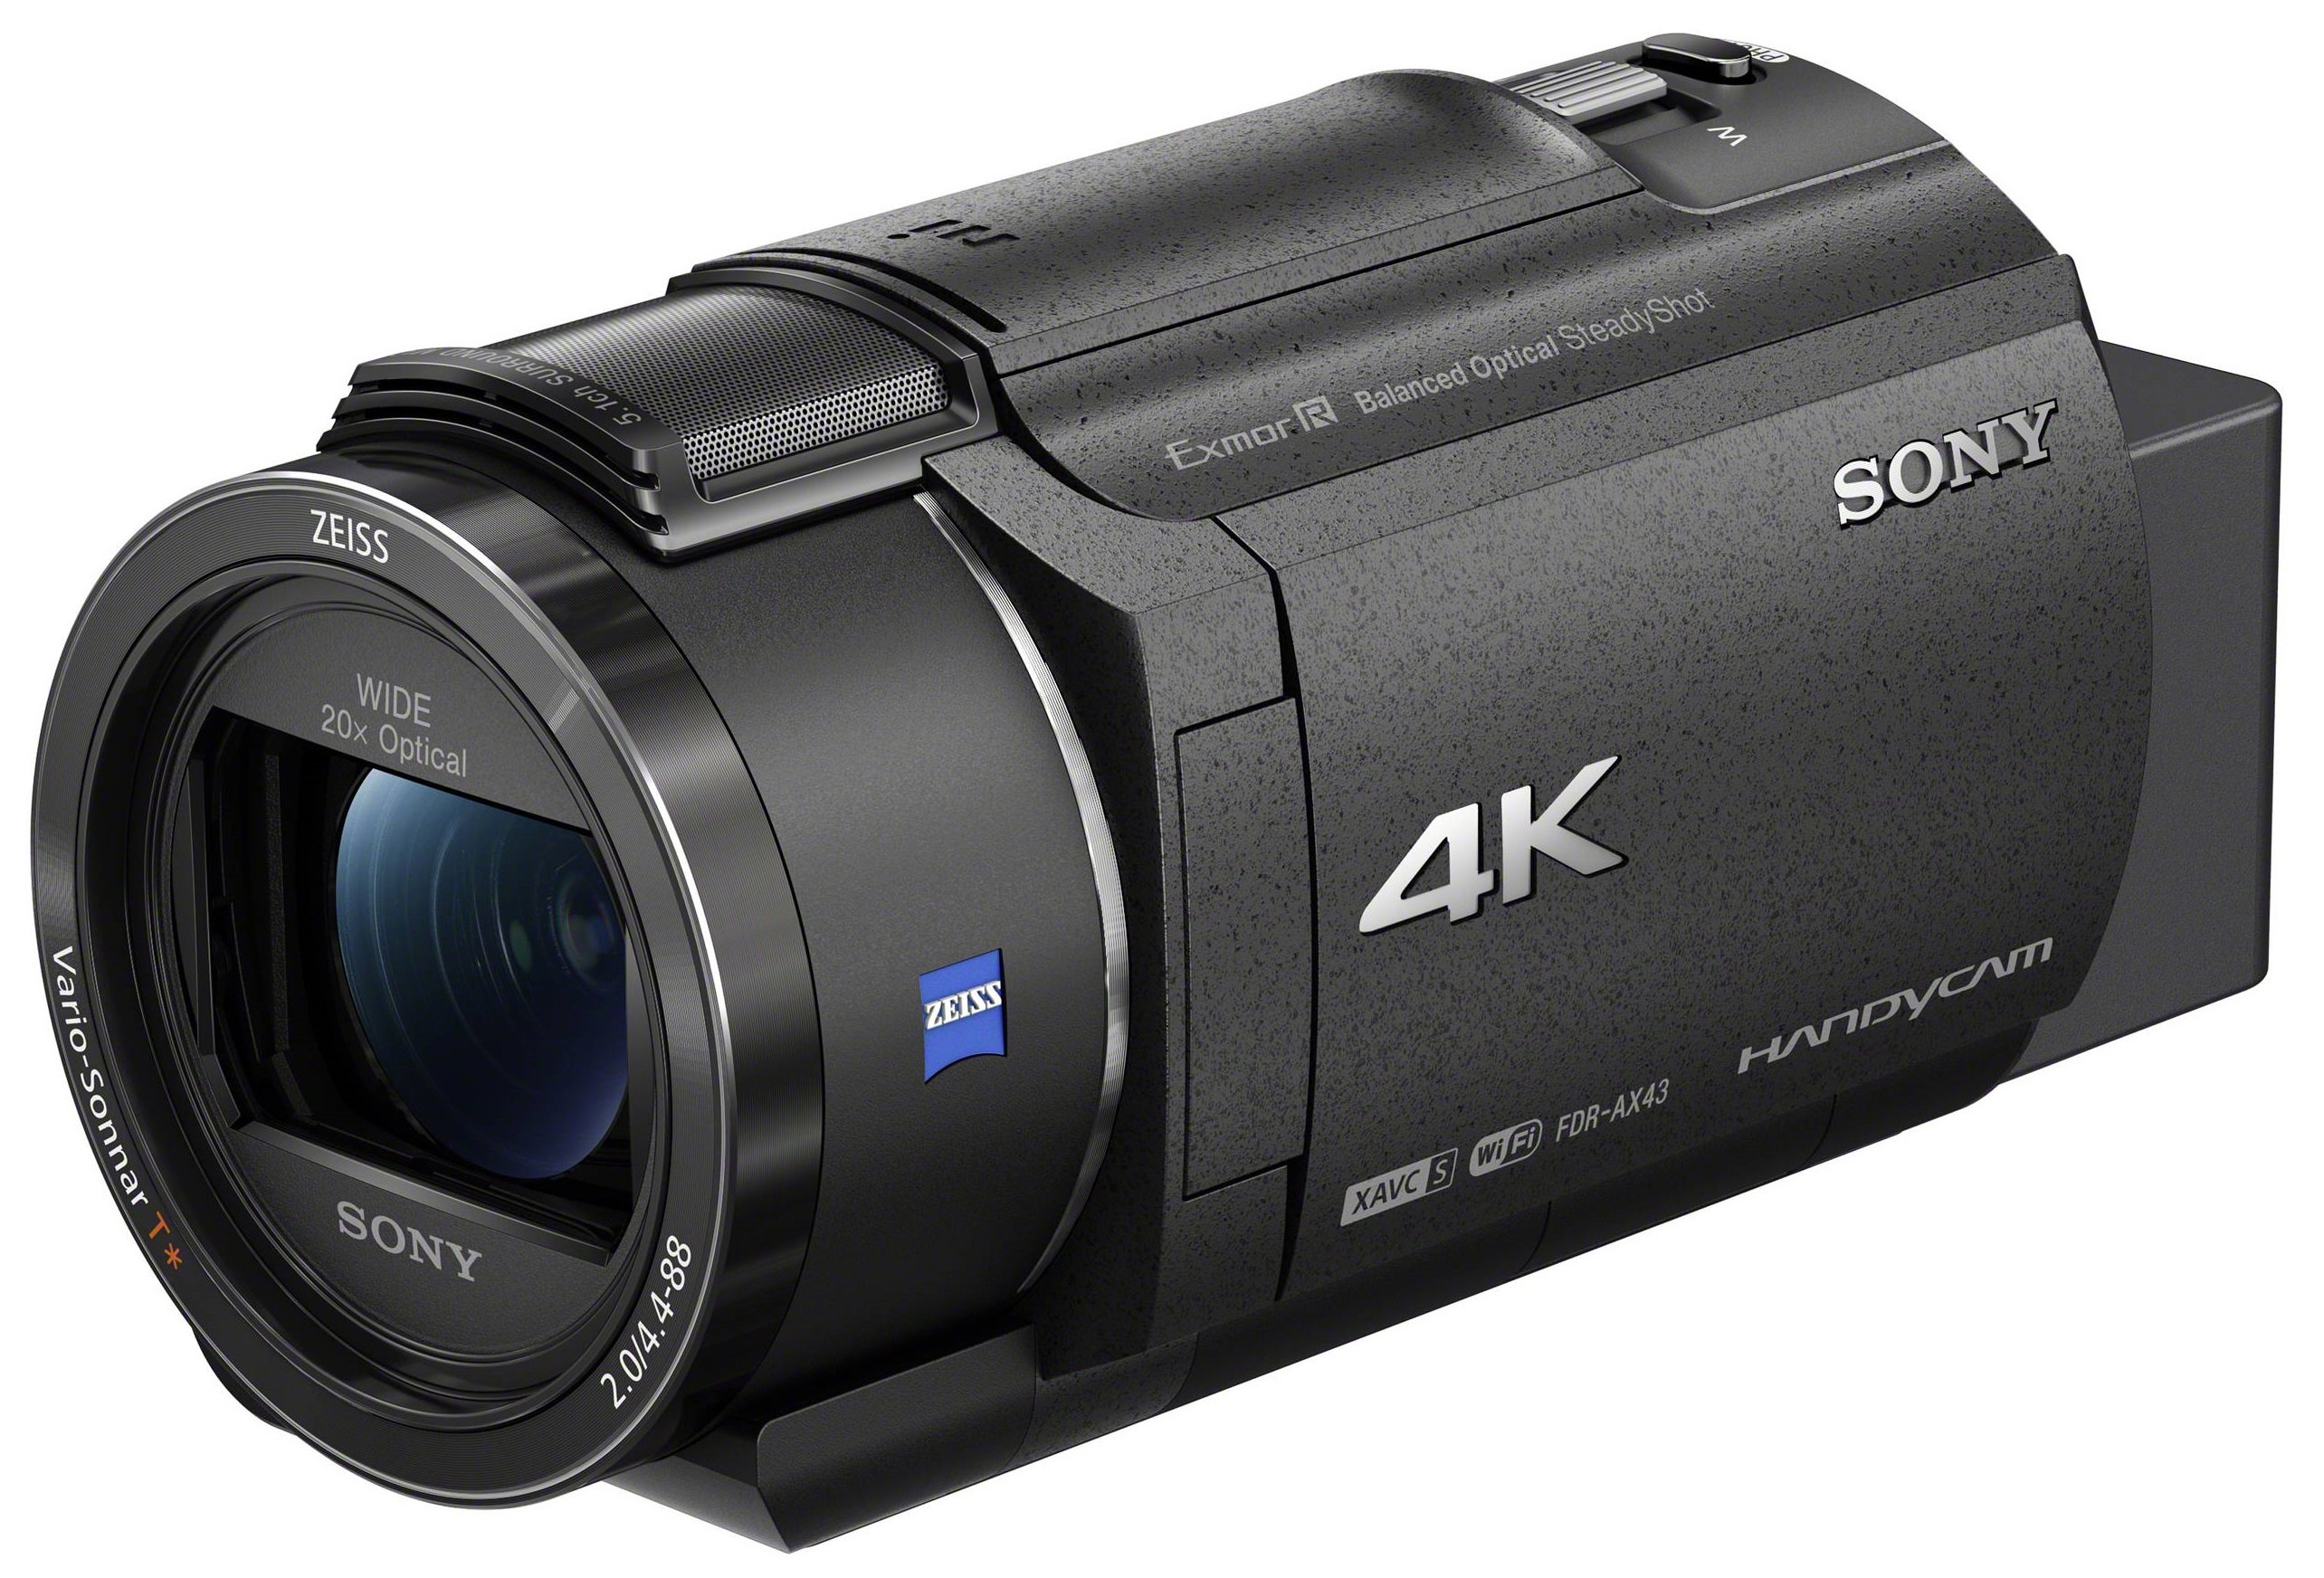 Sony 1 купить в москве. Sony FDR-ax53. Видеокамера Sony FDR-ax53. Sony-FDR ax33 Black.